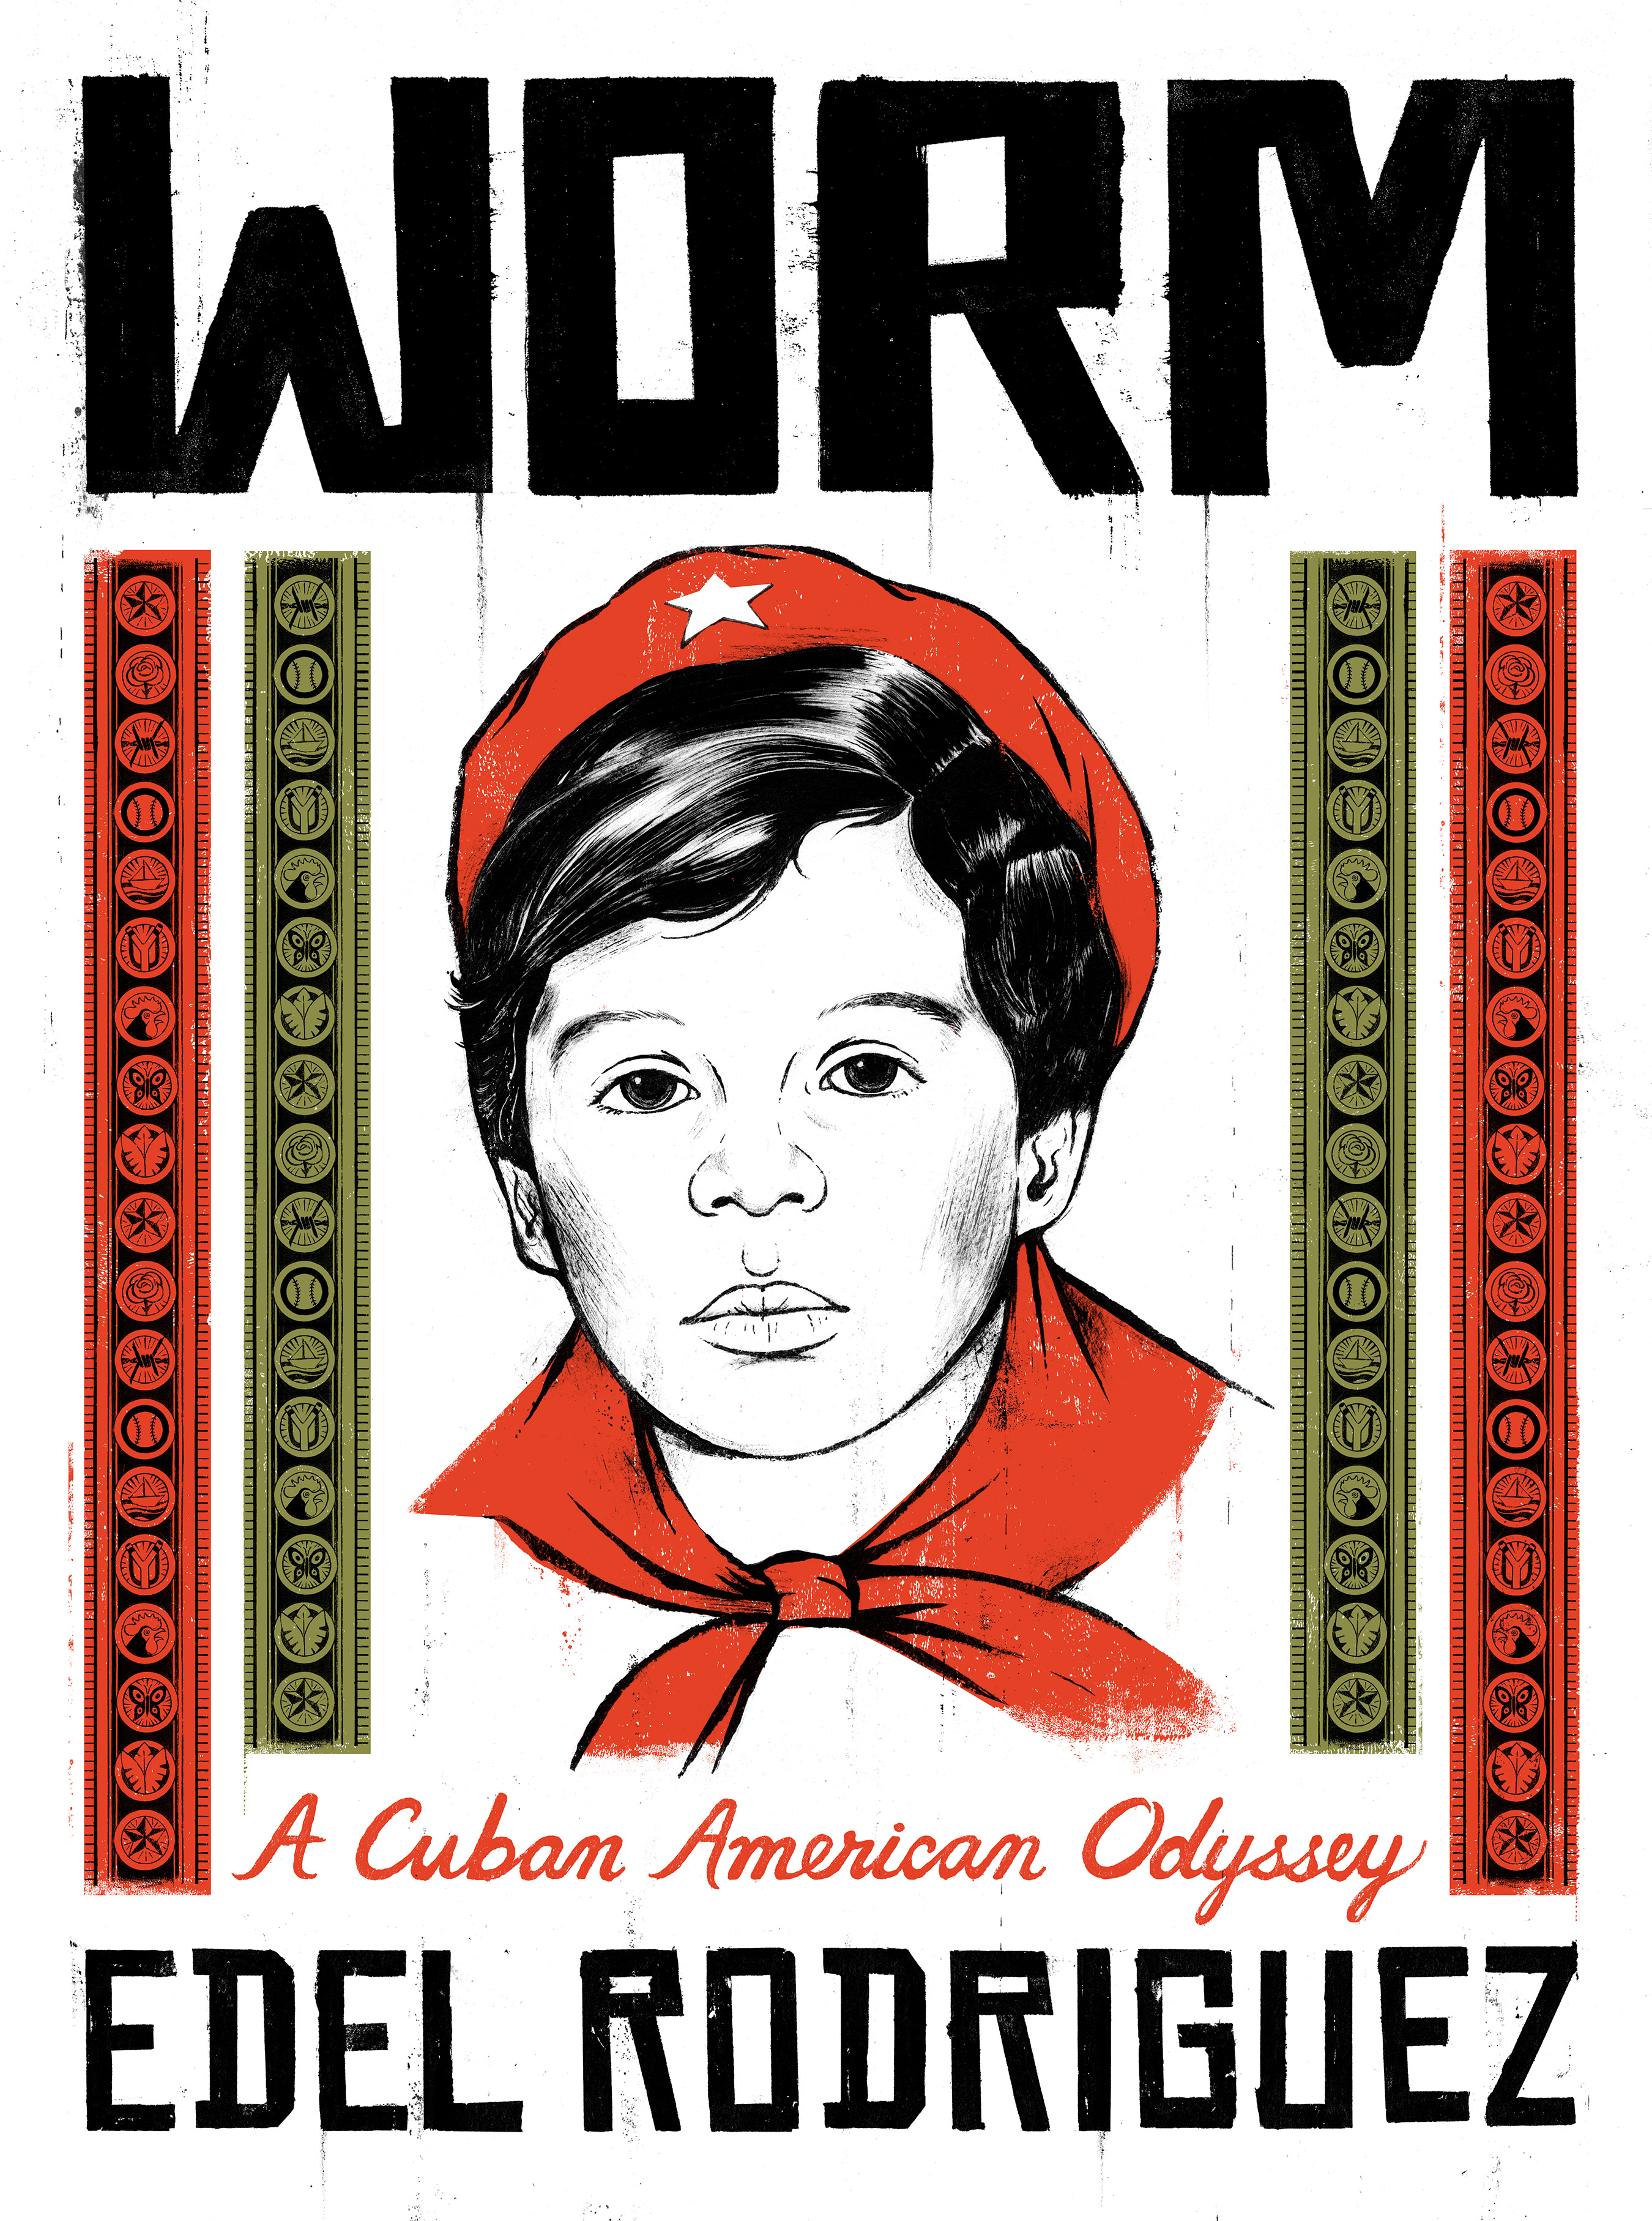 Edel Rodriguez - WORM, a graphic memoir